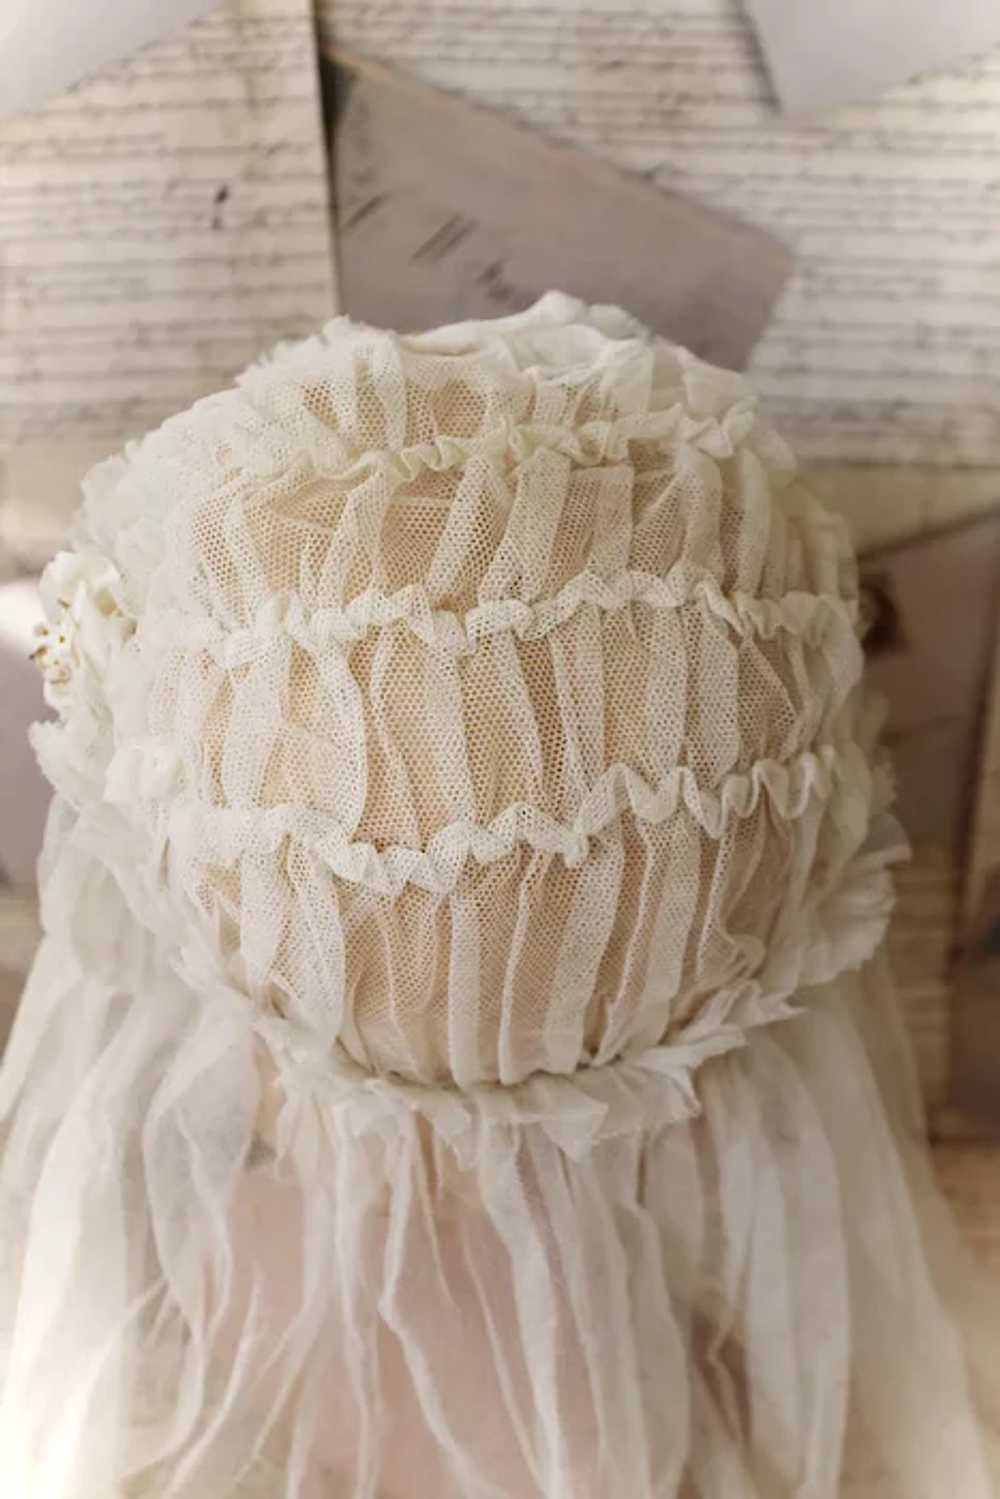 Lovely Tulle Embroidered Vintage Wedding Veil wit… - image 8